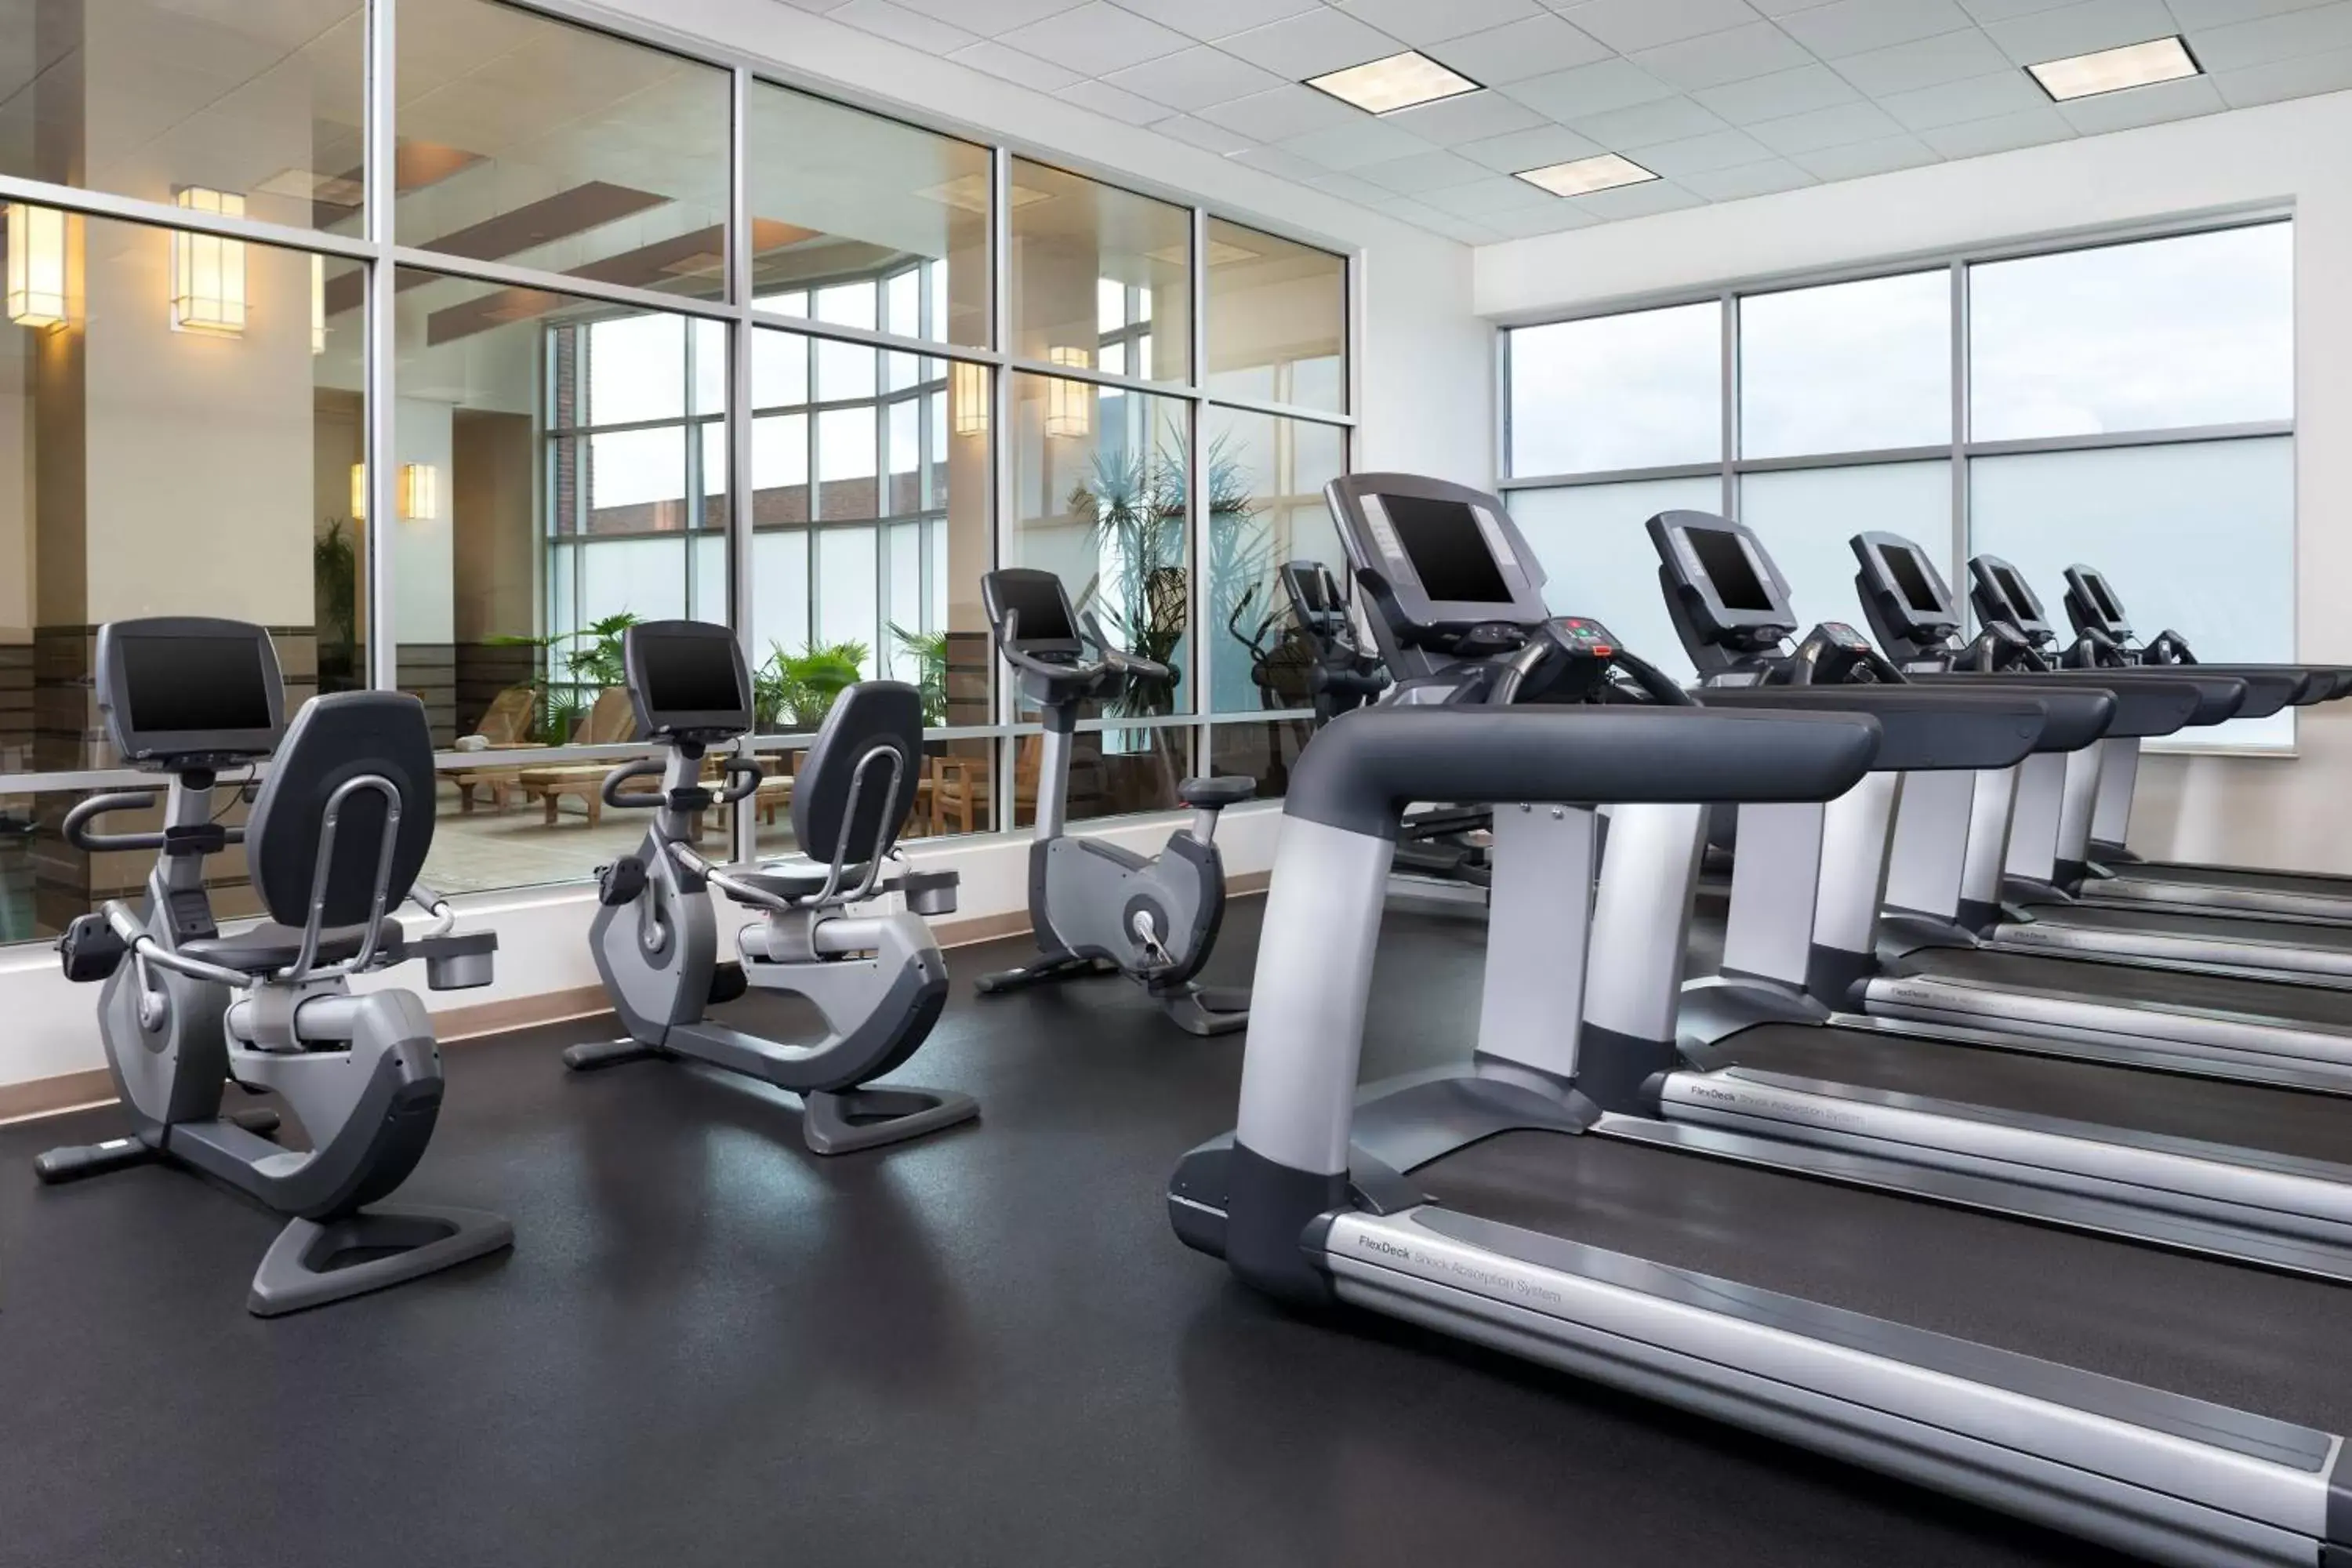 Fitness centre/facilities, Fitness Center/Facilities in The Westin Edina Galleria